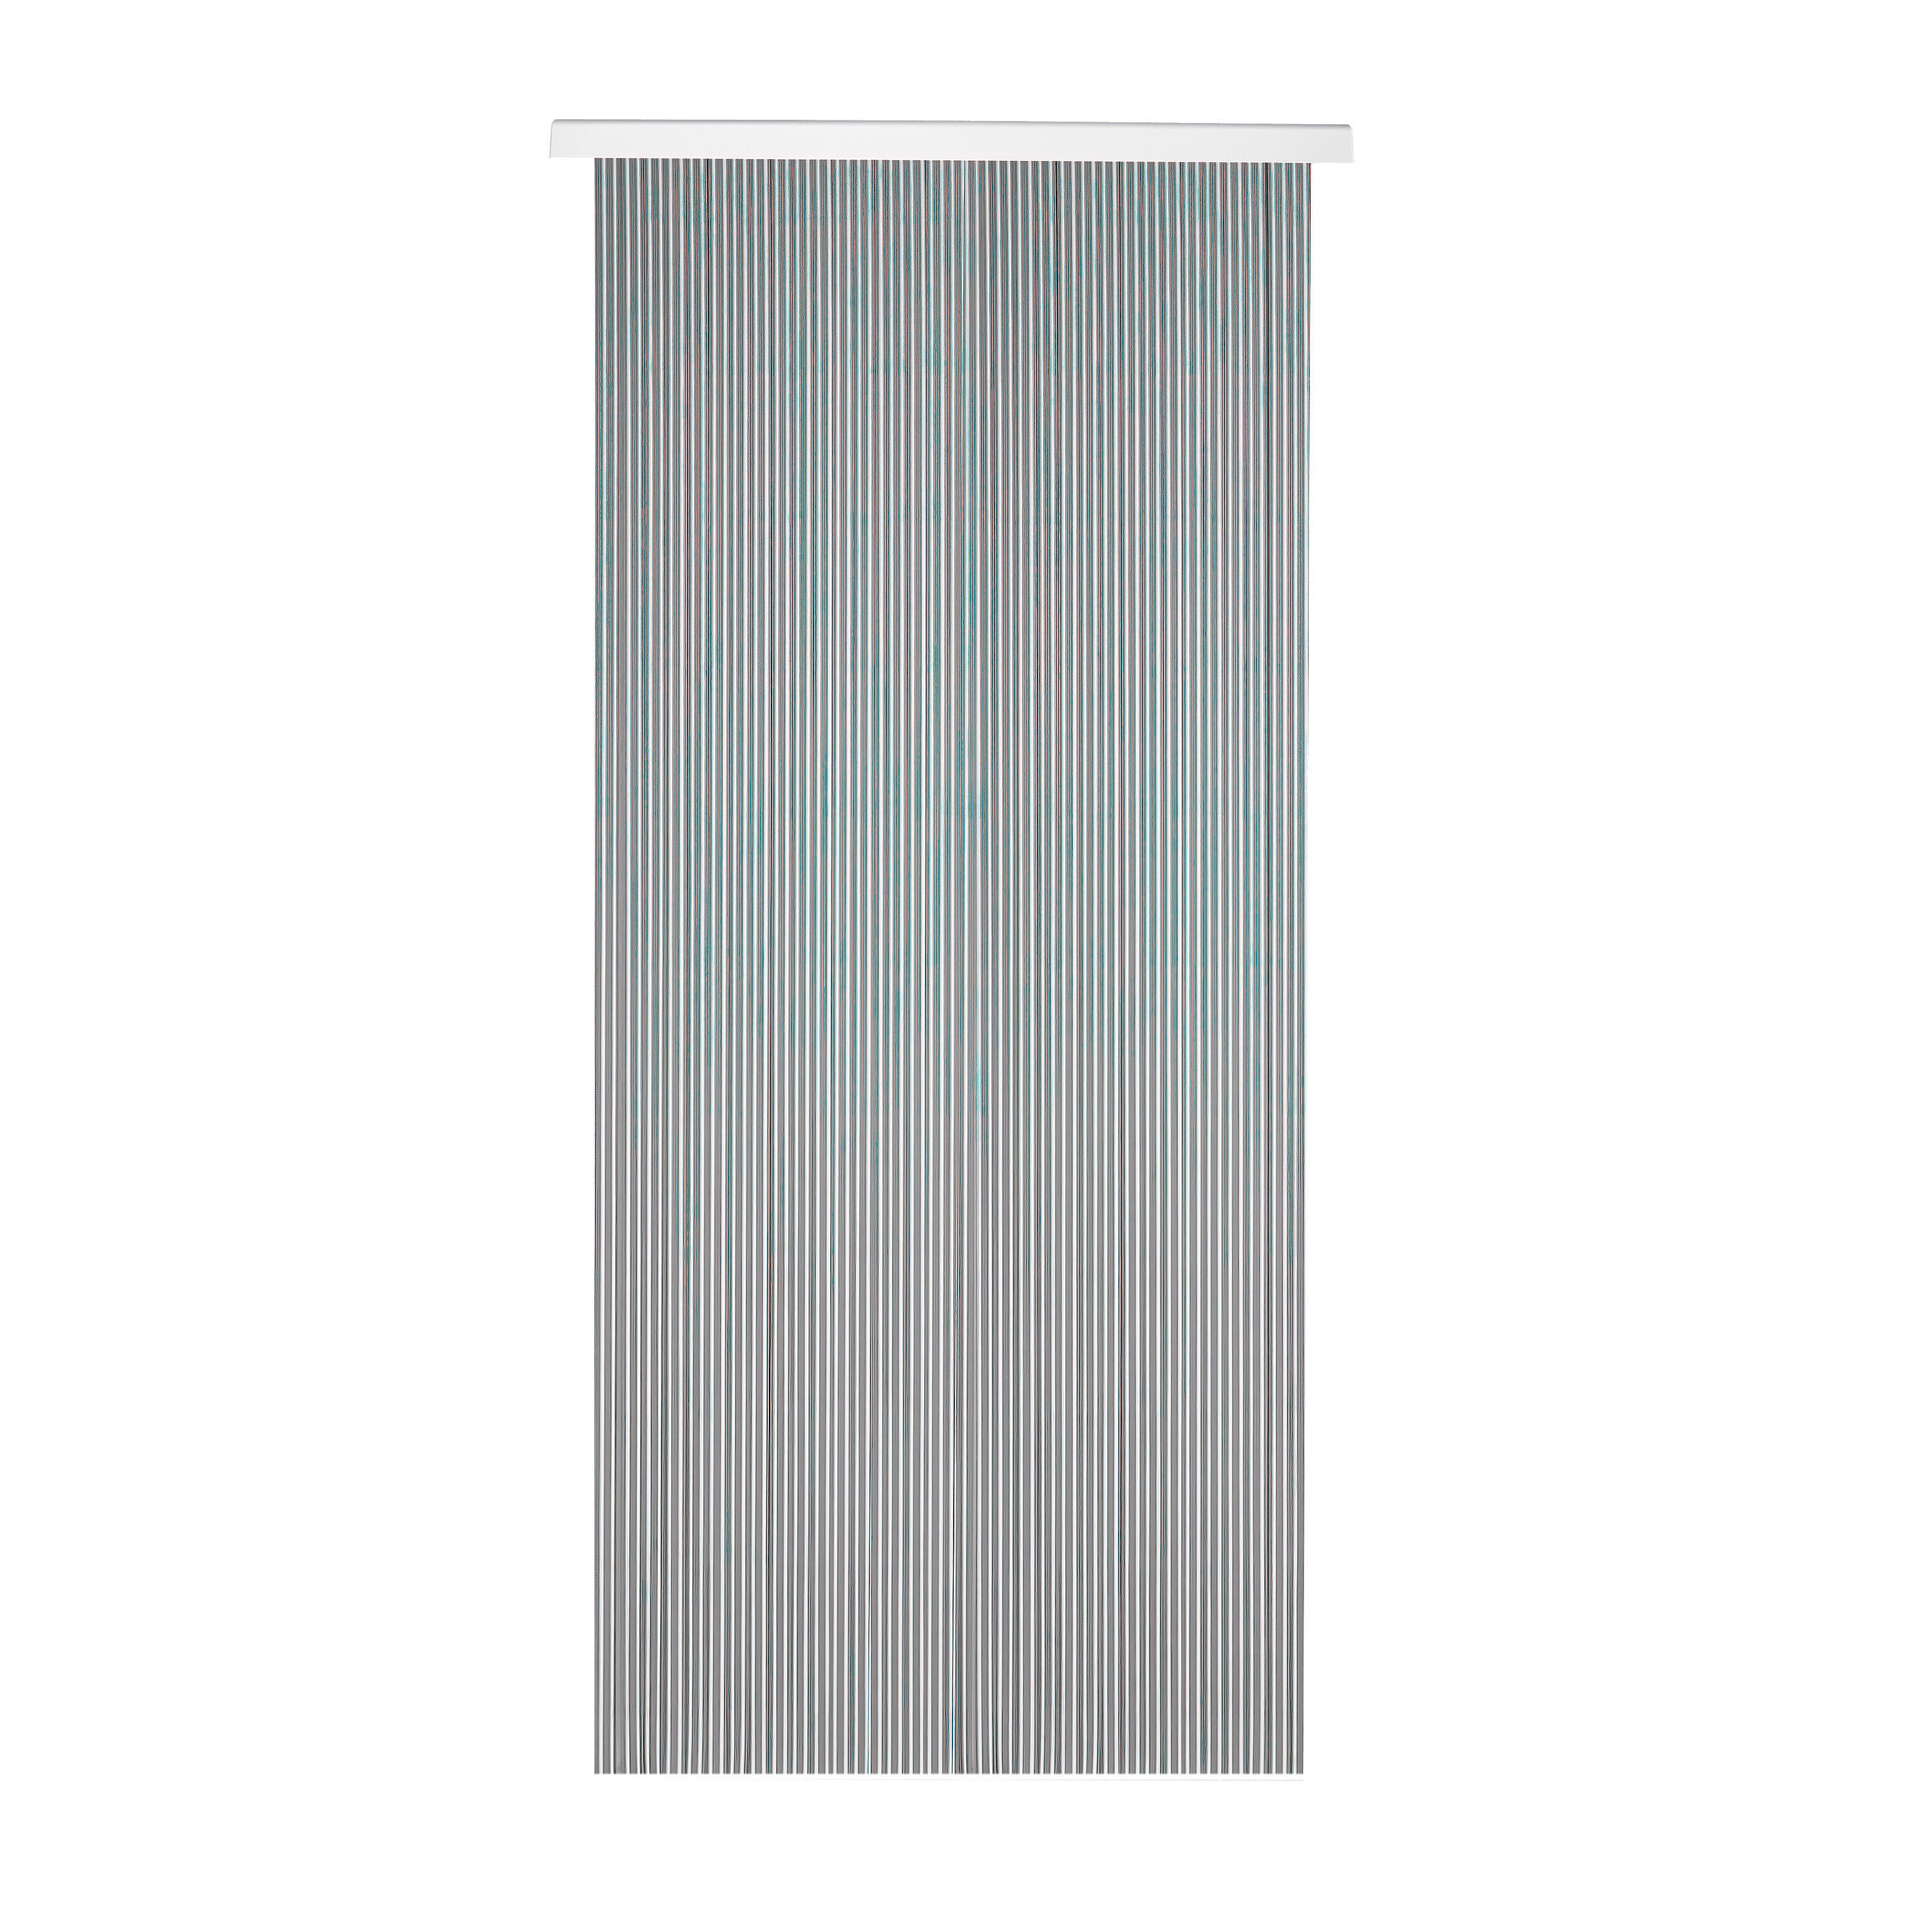 Cortina de puerta pvc guadiana gris-blanco 90 x 210 cm